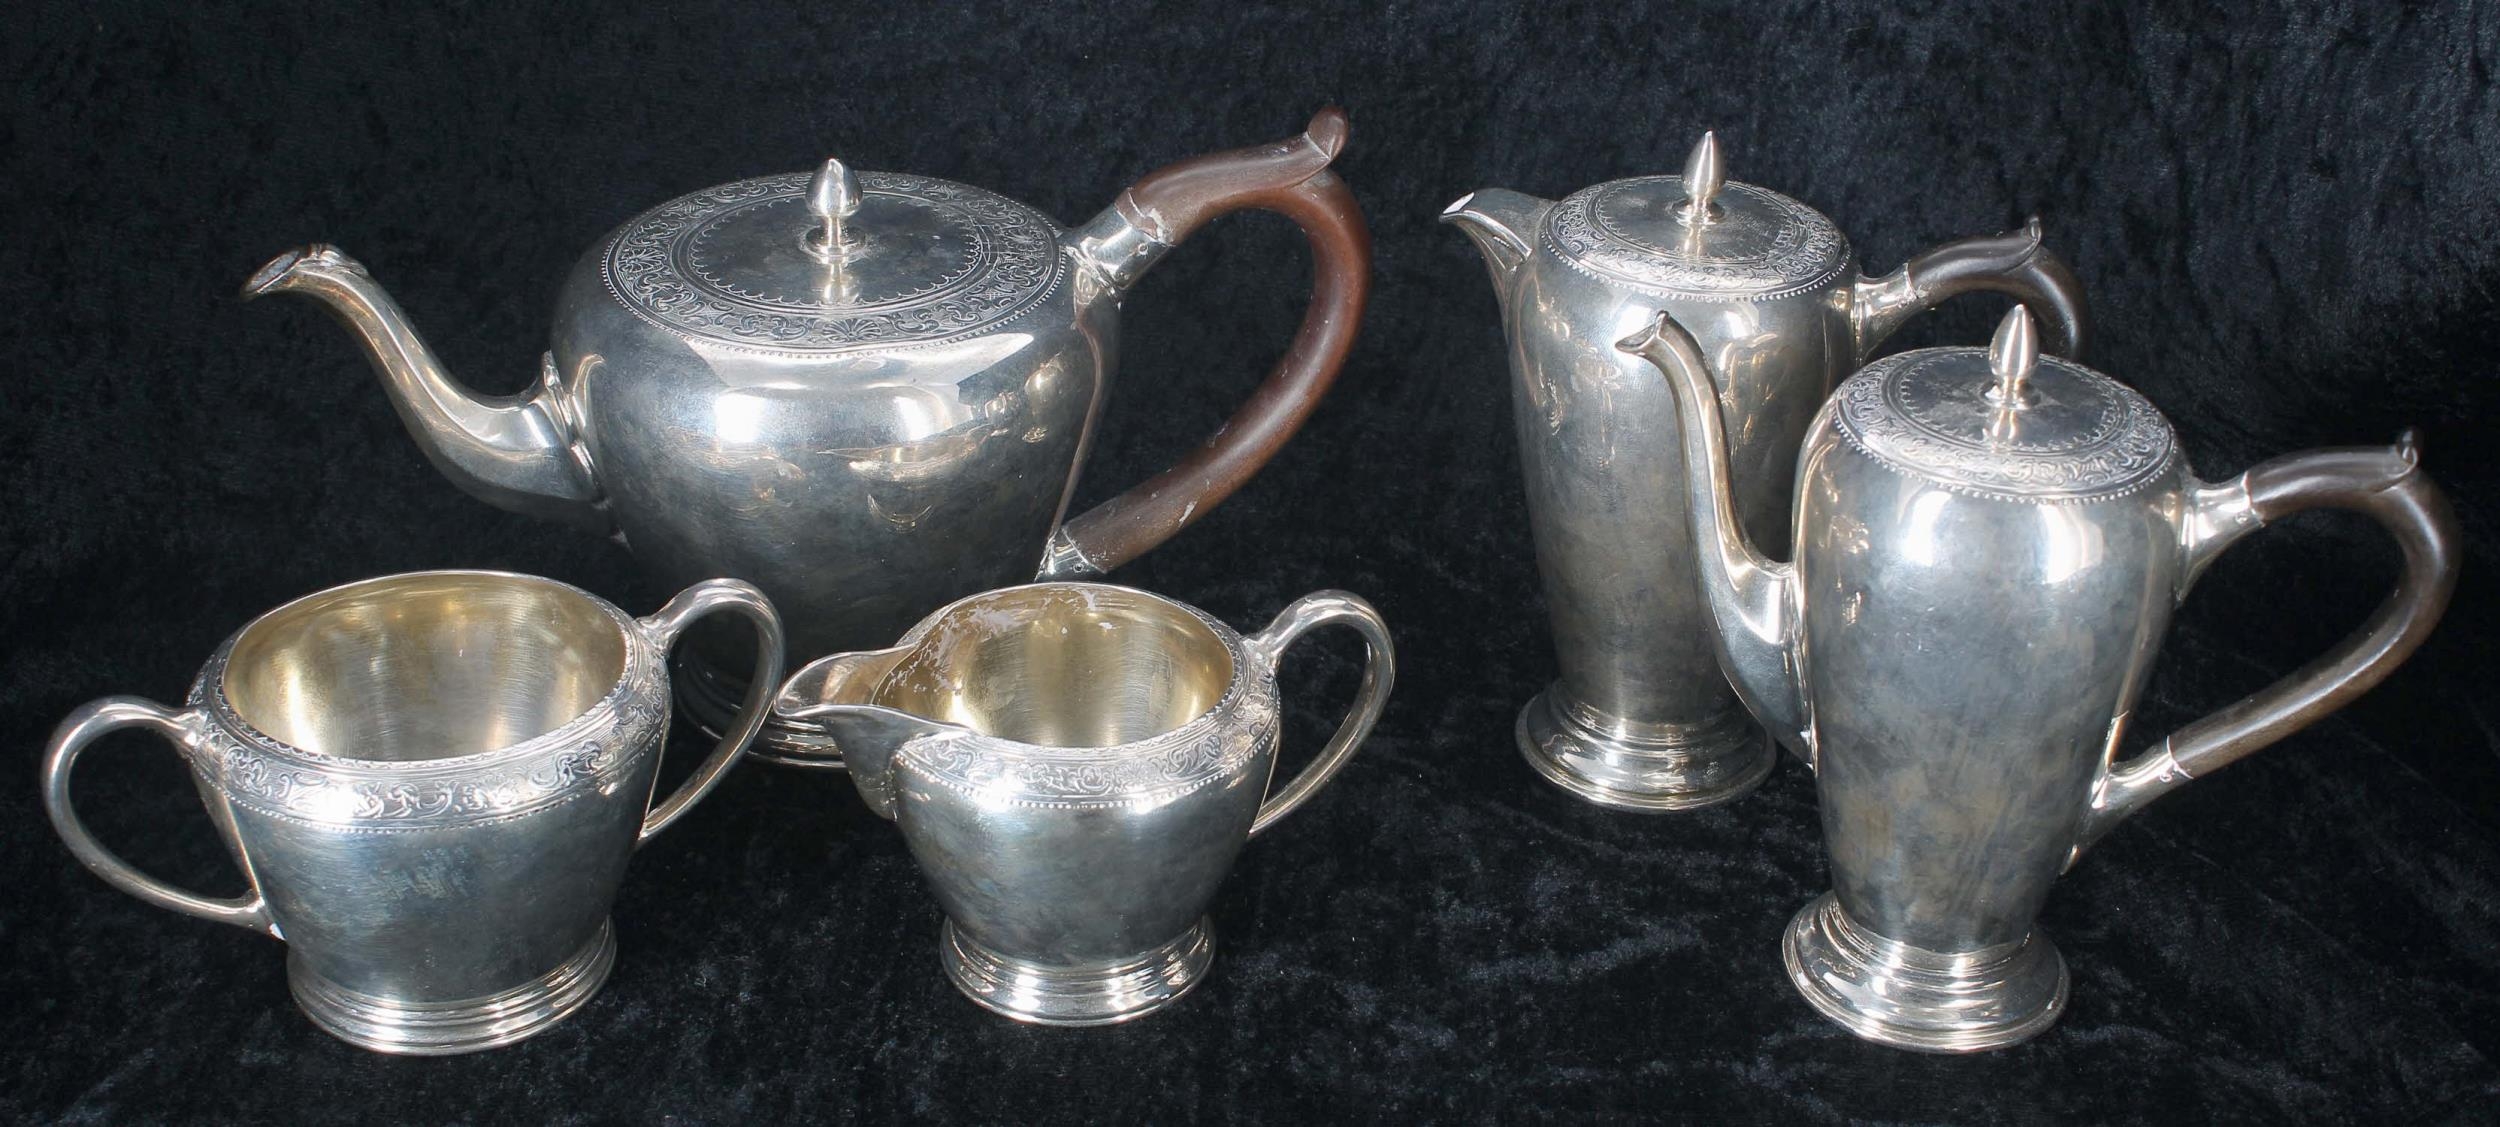 Edward Barnard & Sons for Tiffany & Co. London silver bachelor tea set, comprising teapot, cream jug - Image 2 of 3